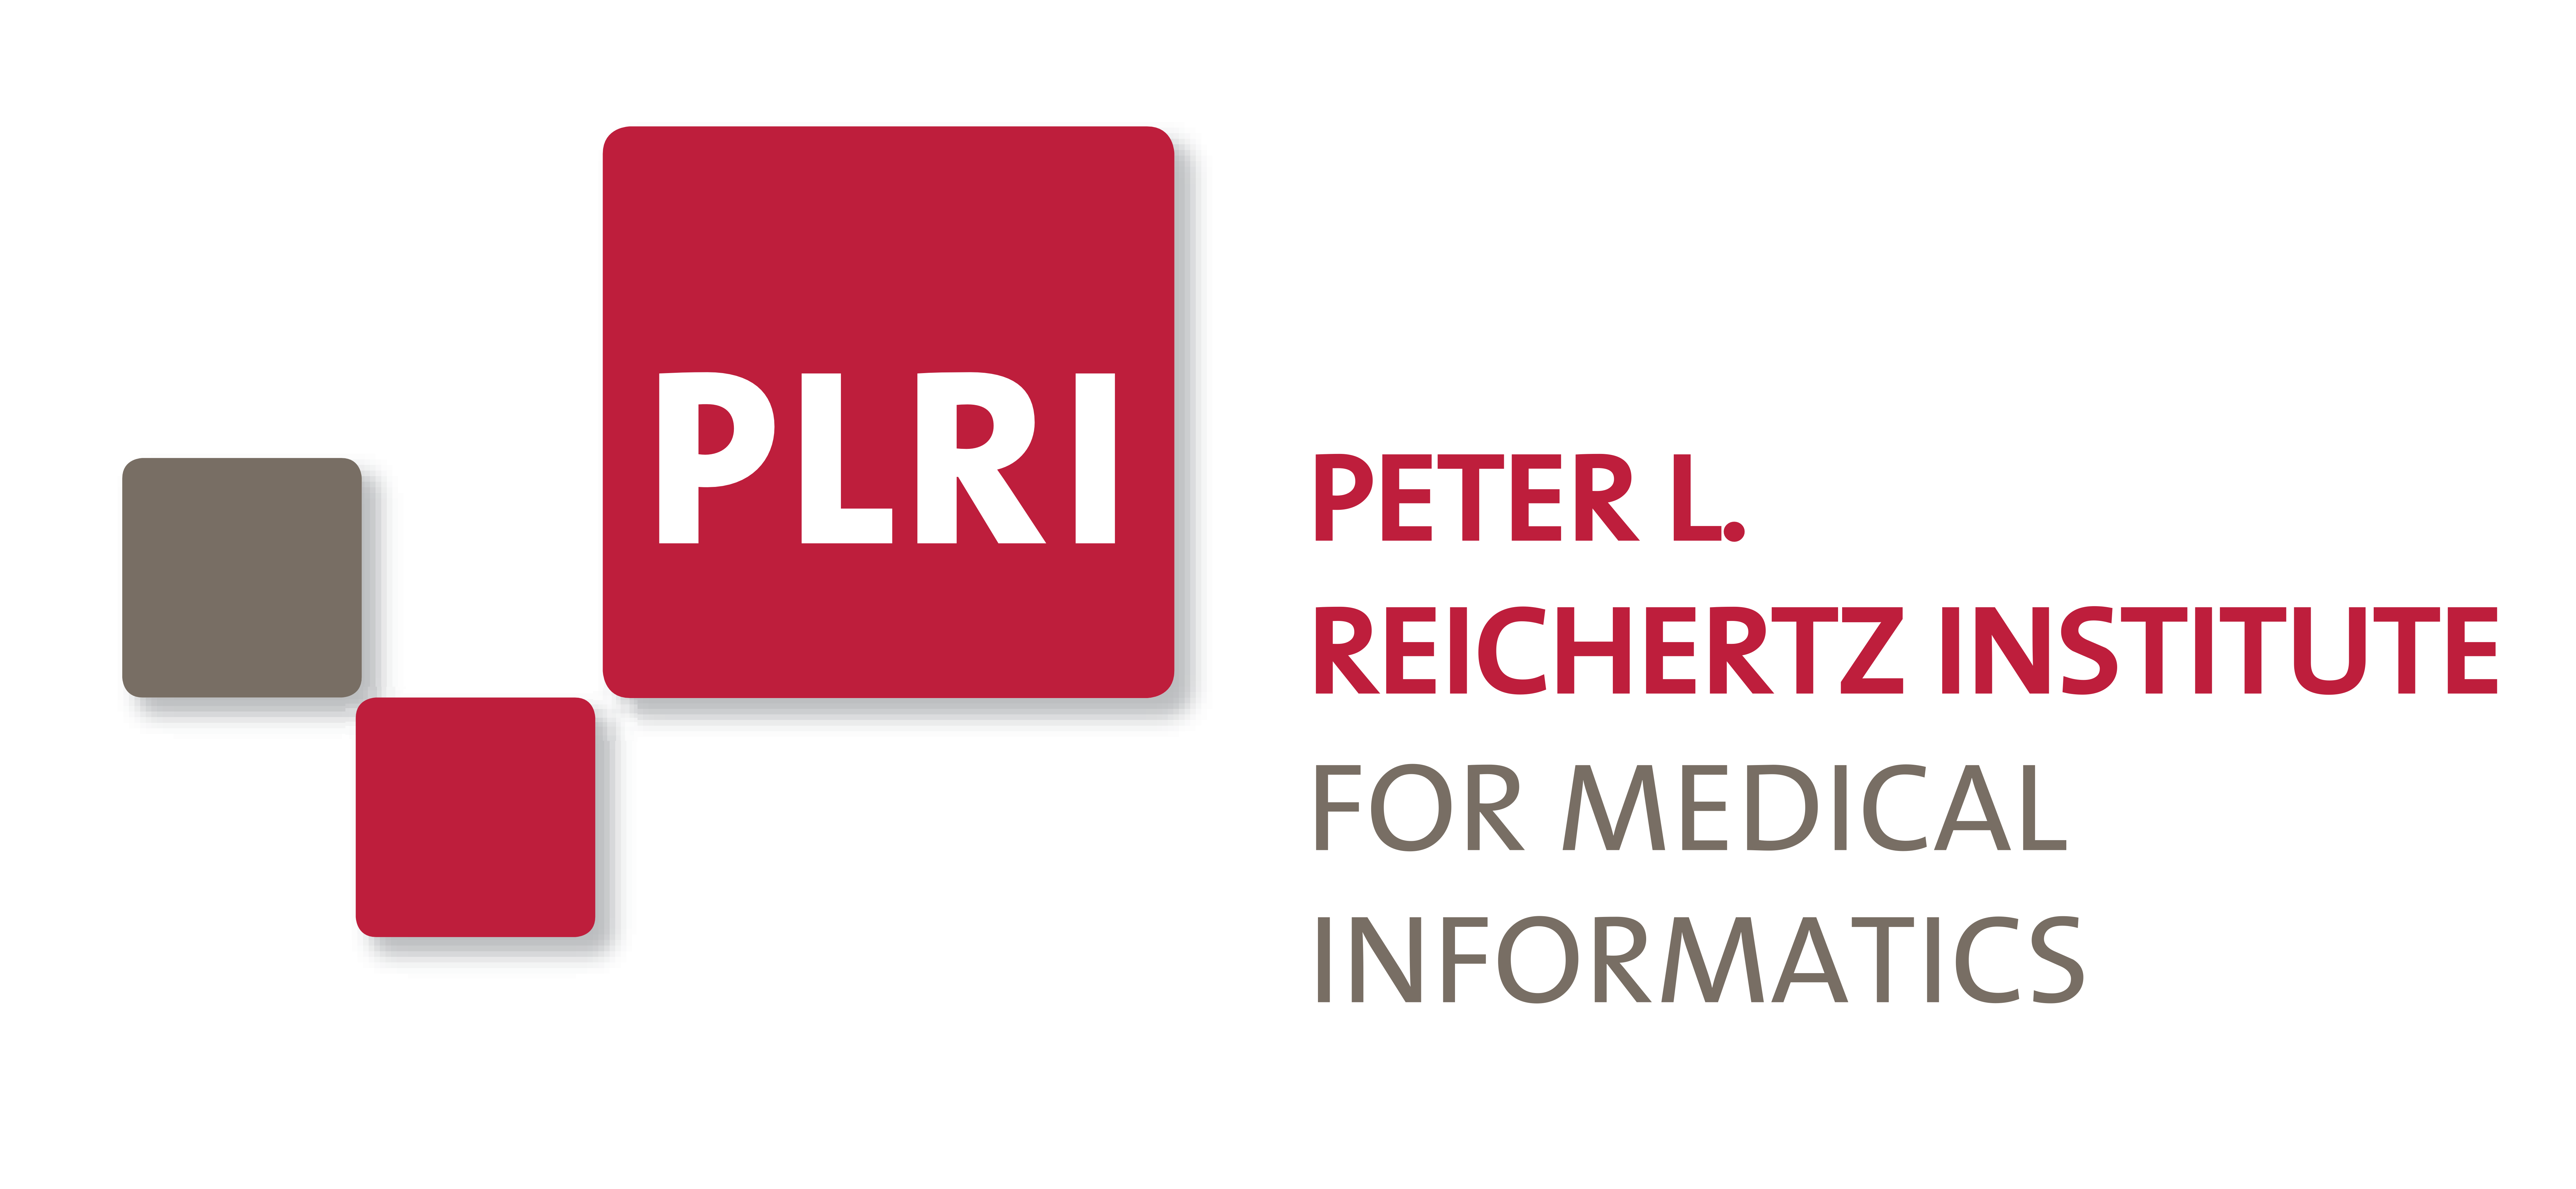 Peter L. Reichertz Institute for Medical Informatics: PLRI